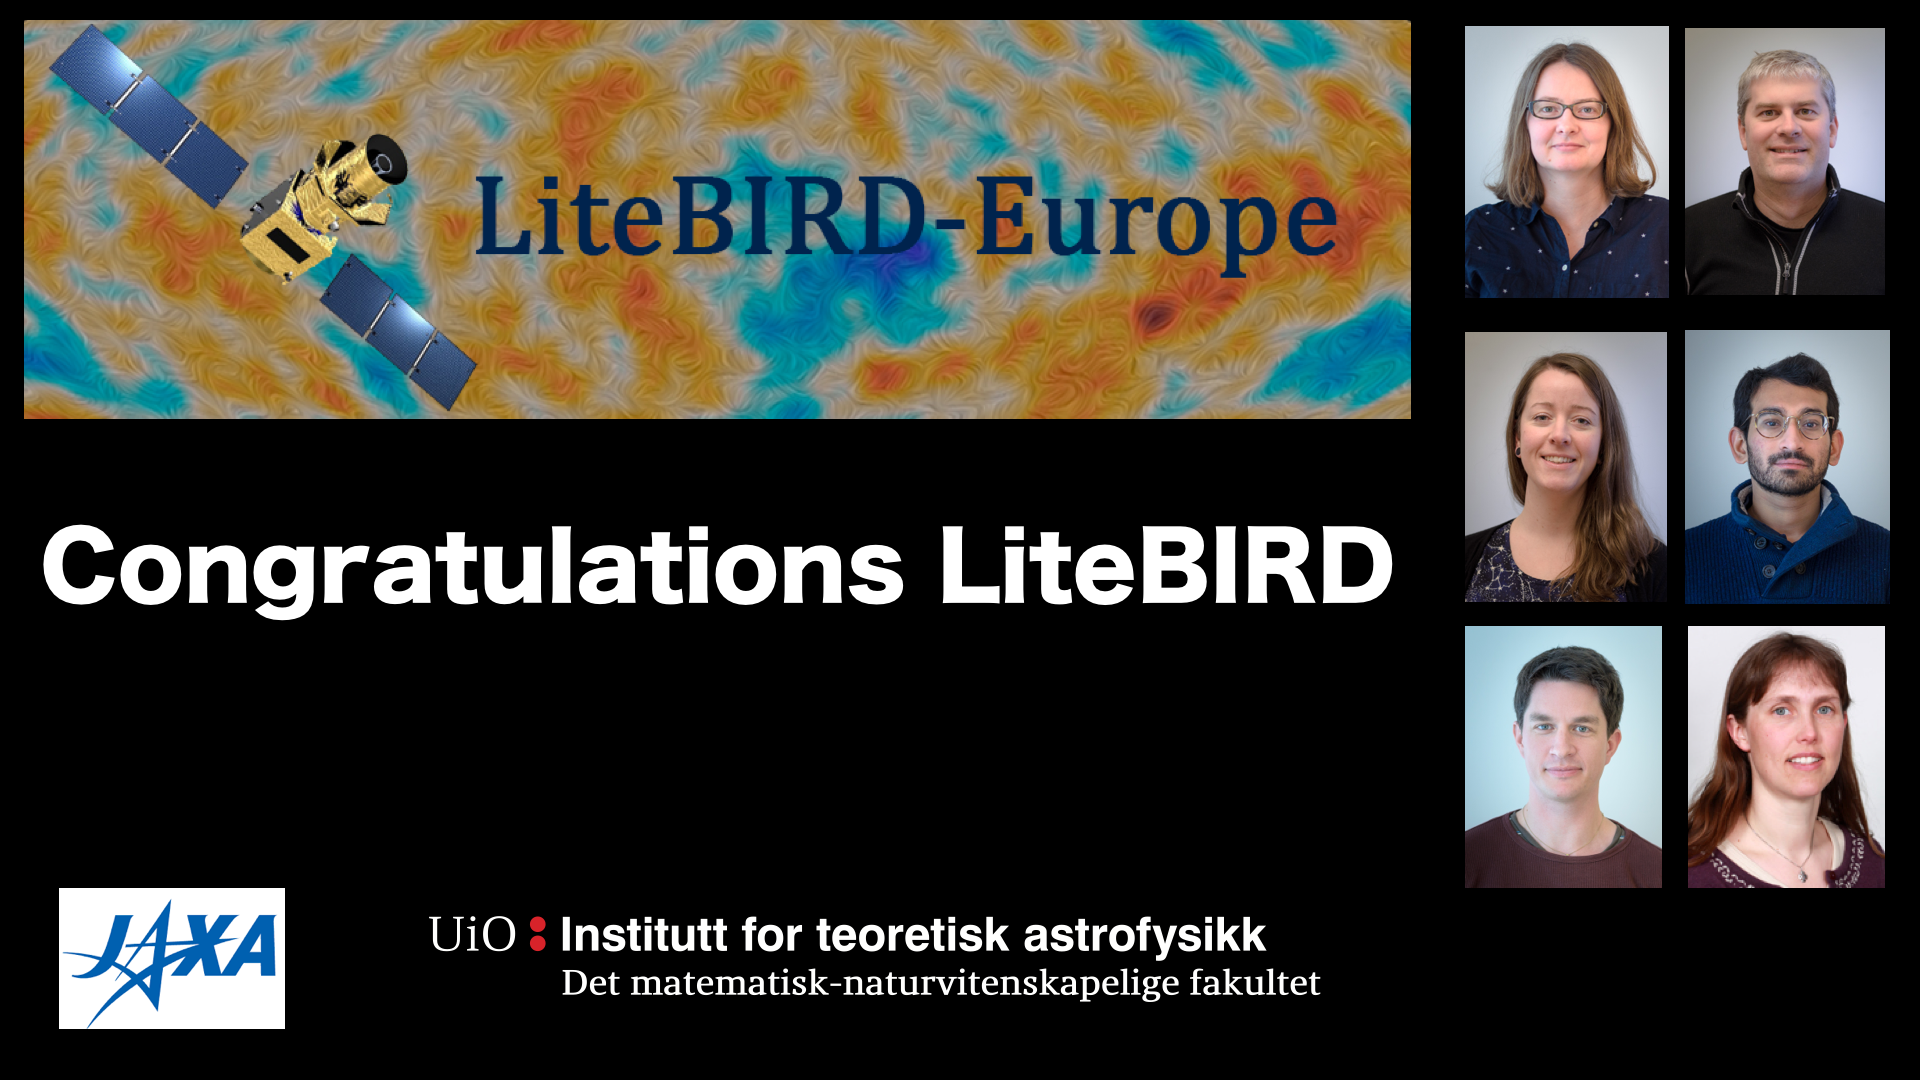 LiteBIRD research group at ITA